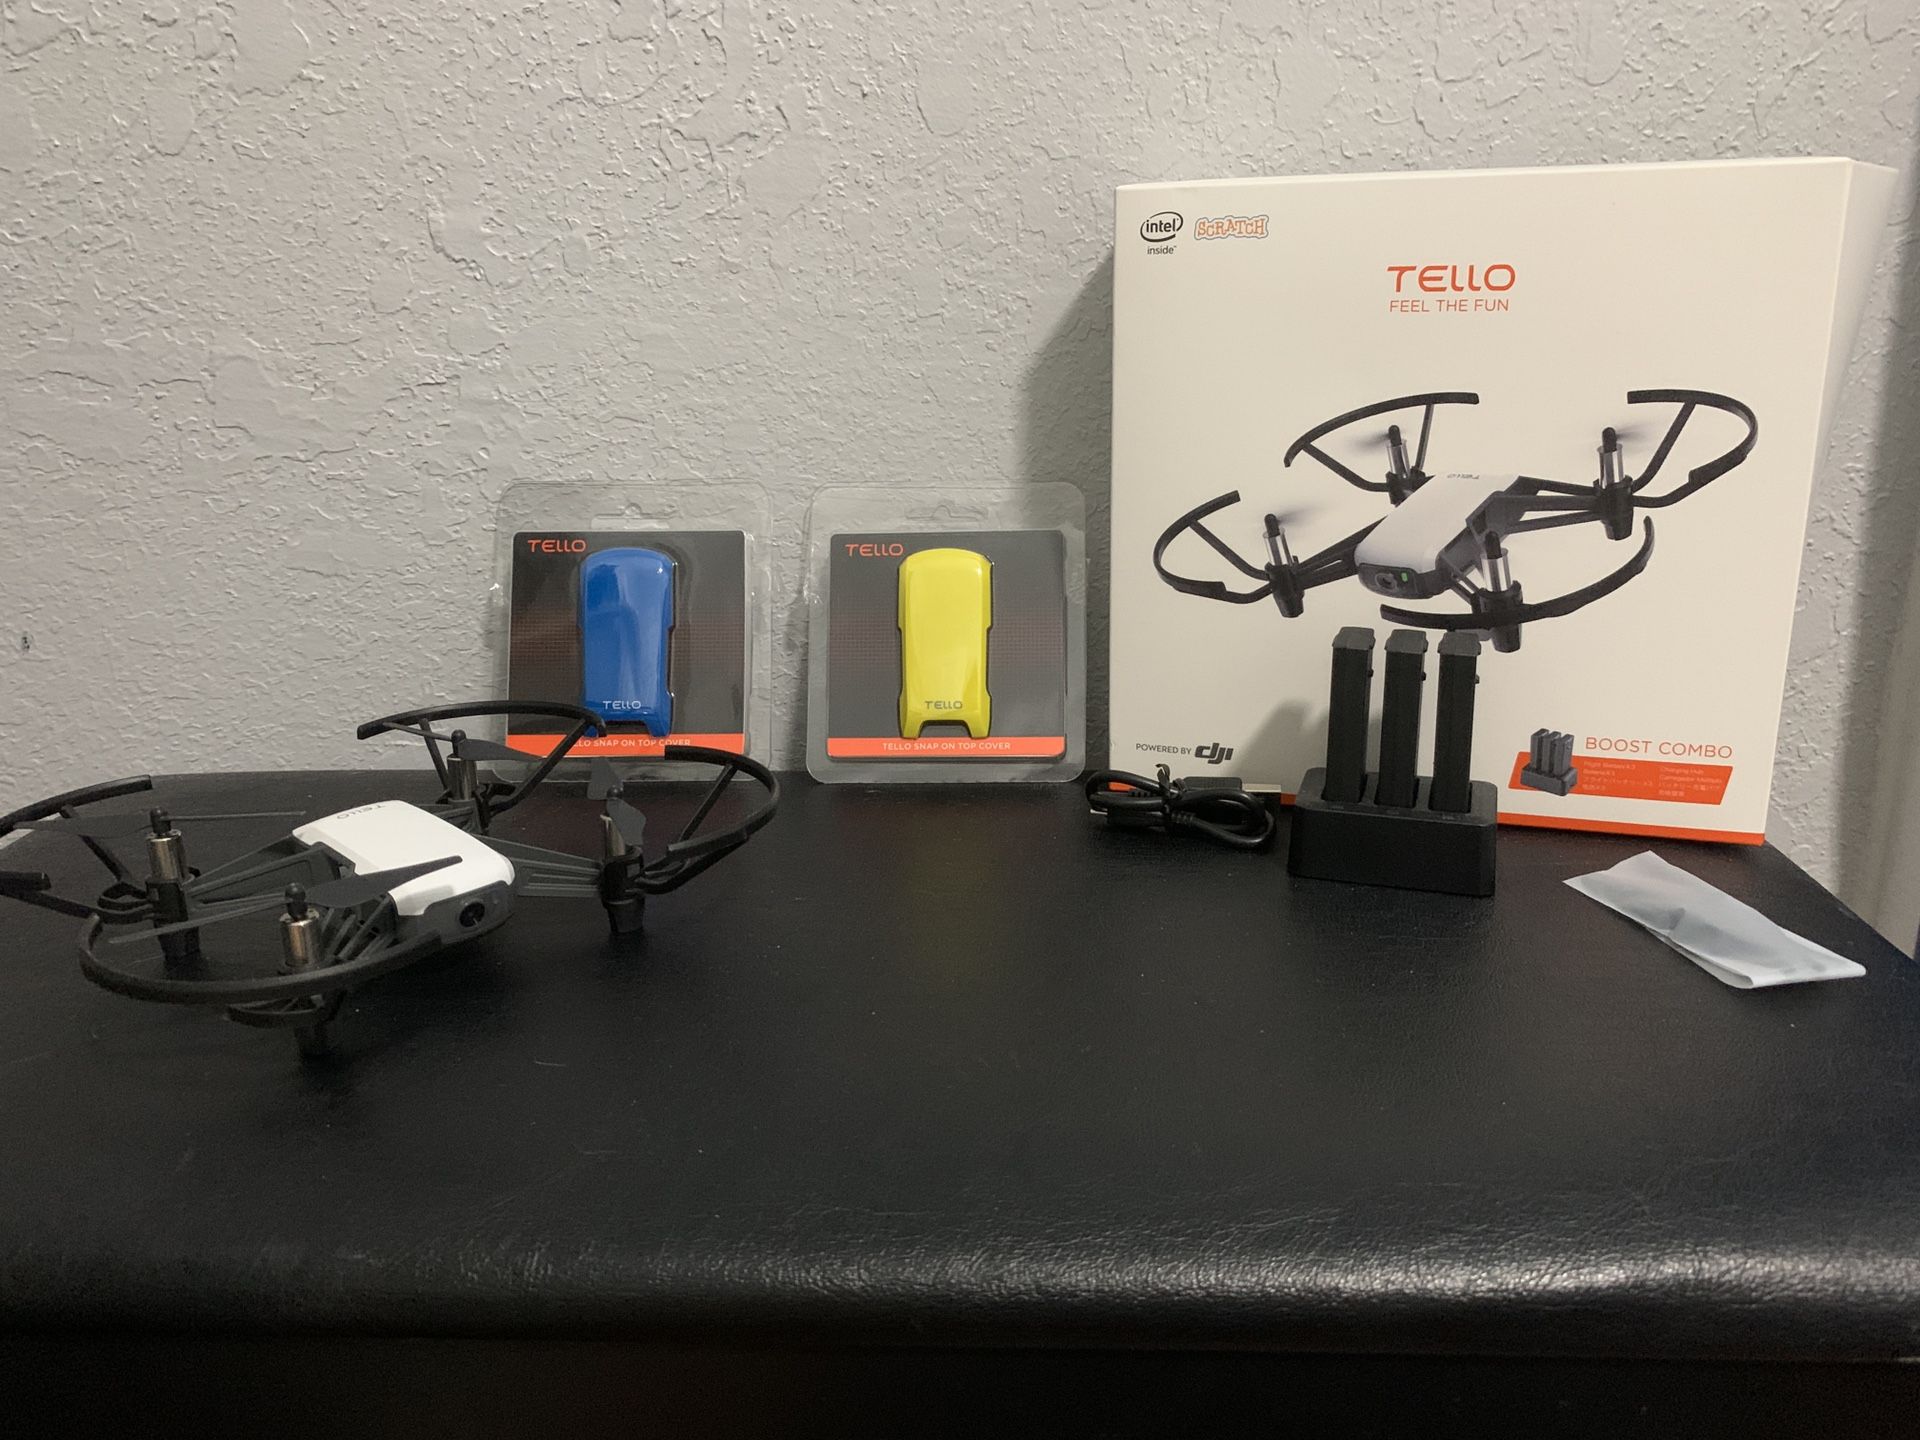 Ryze Tello WiFi drone combo kit